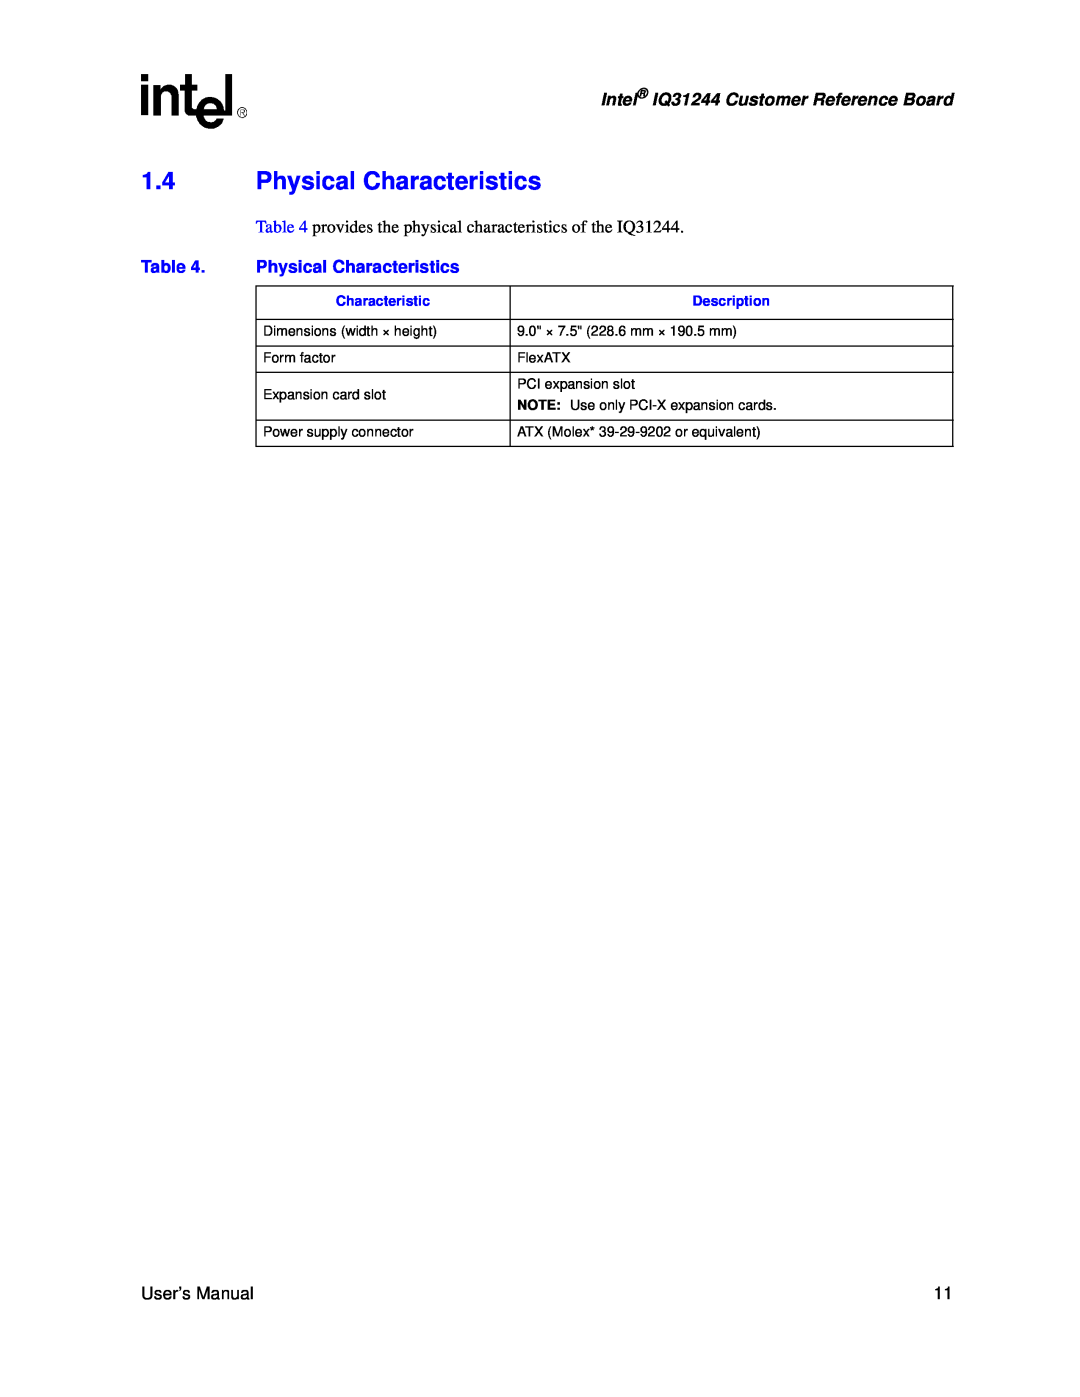 Intel user manual 1.4Physical Characteristics, Intel IQ31244 Customer Reference Board, Description 